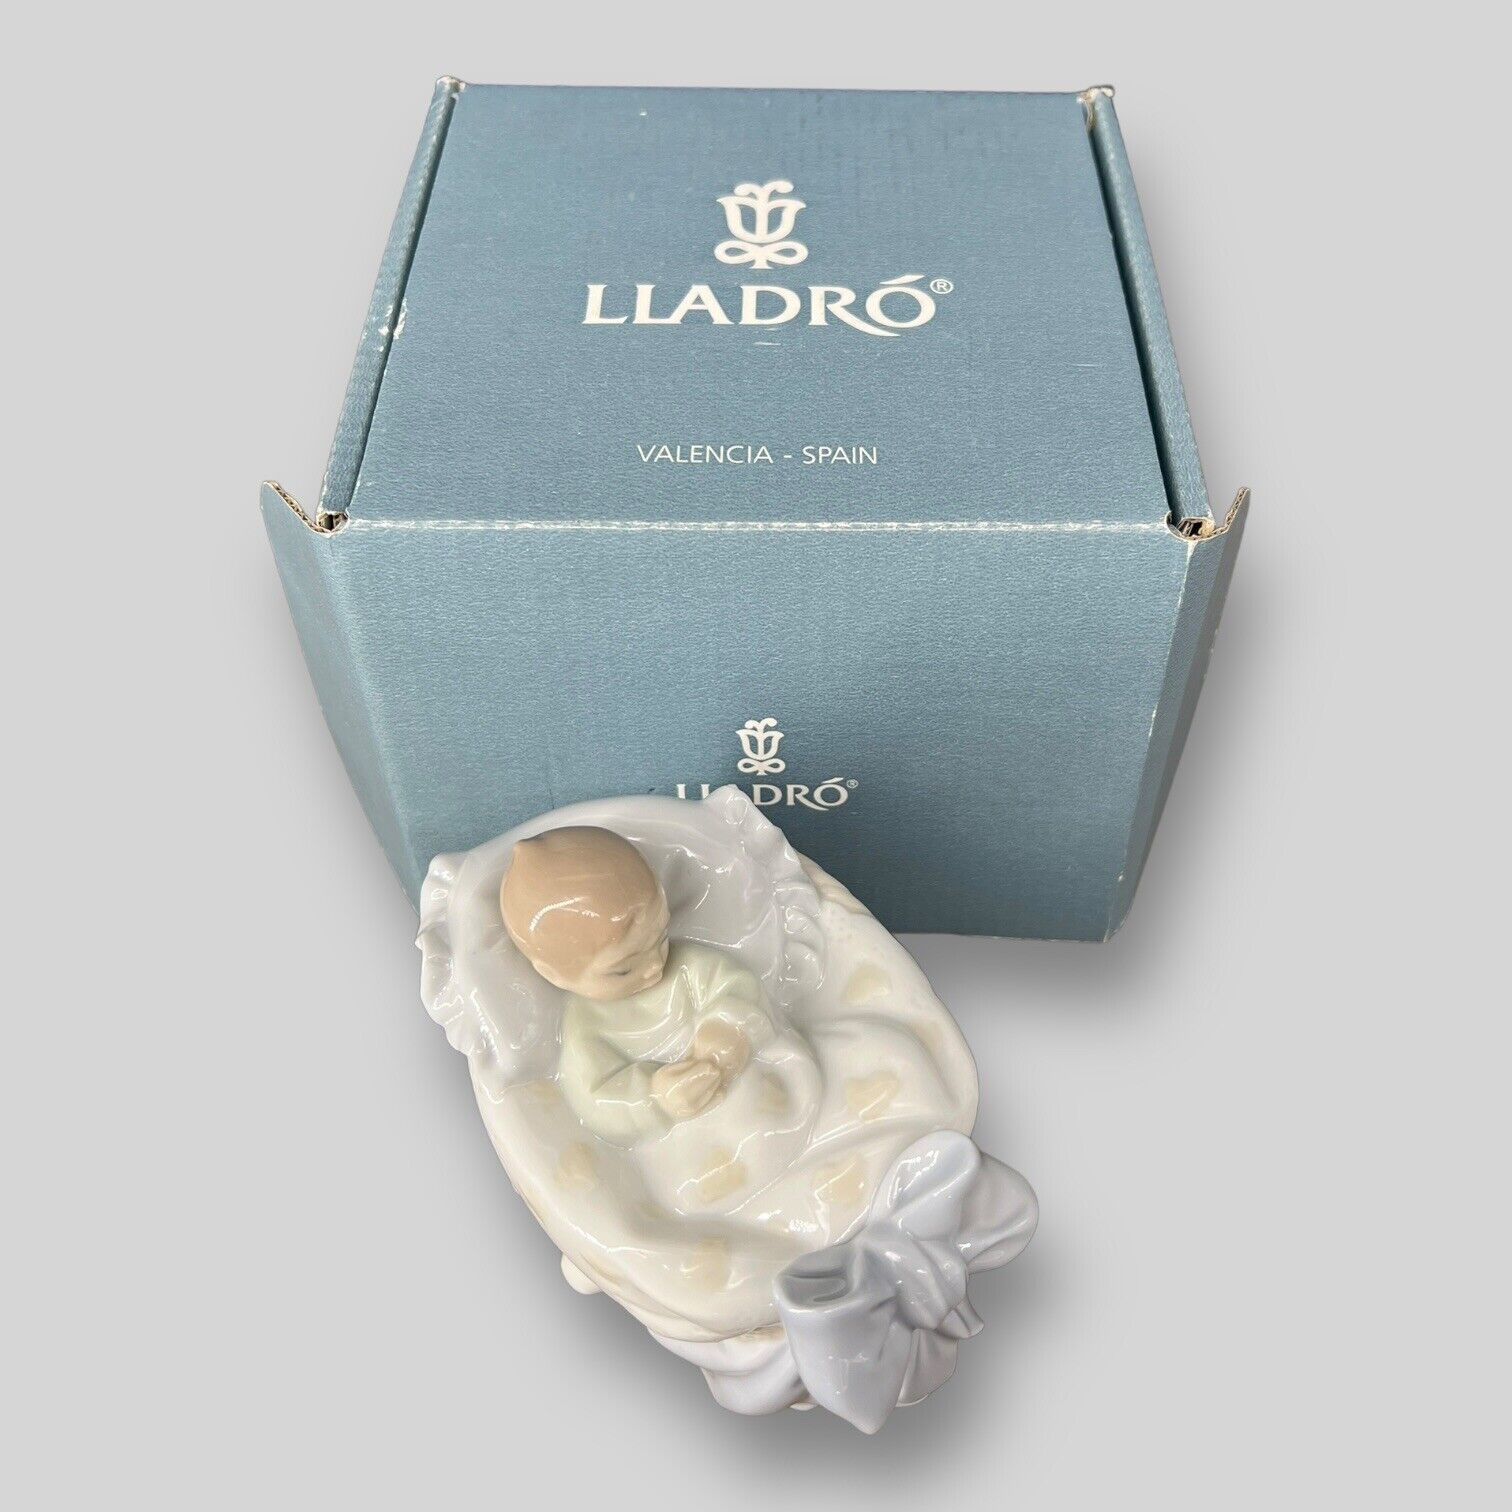 Vintage Lladro A New Treasure Boy Porcelain Figurine #01006976 with Original Box